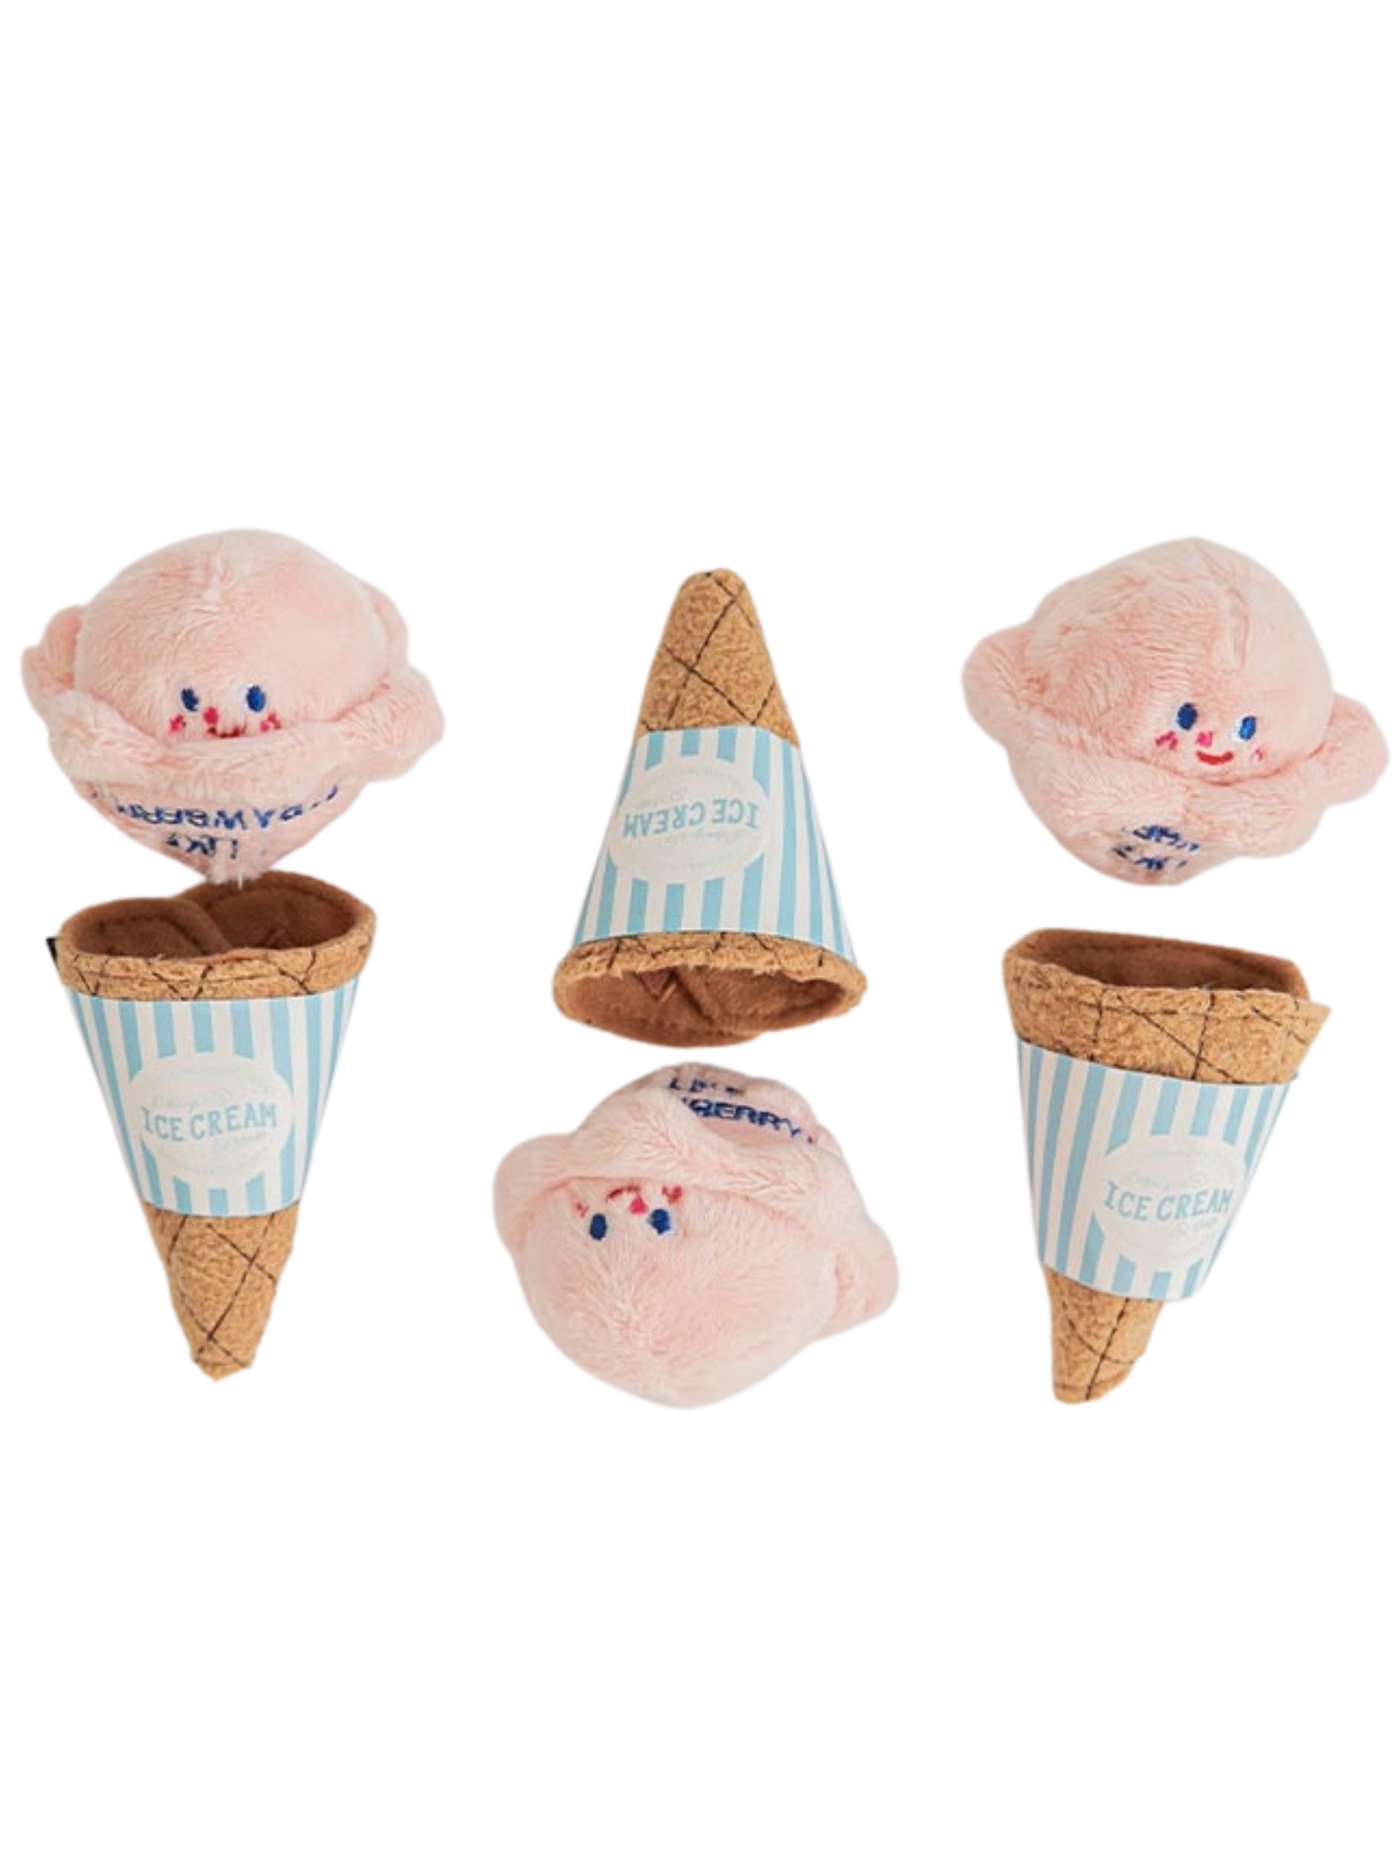 Biteme | 韓國精品雪糕甜筒玩具